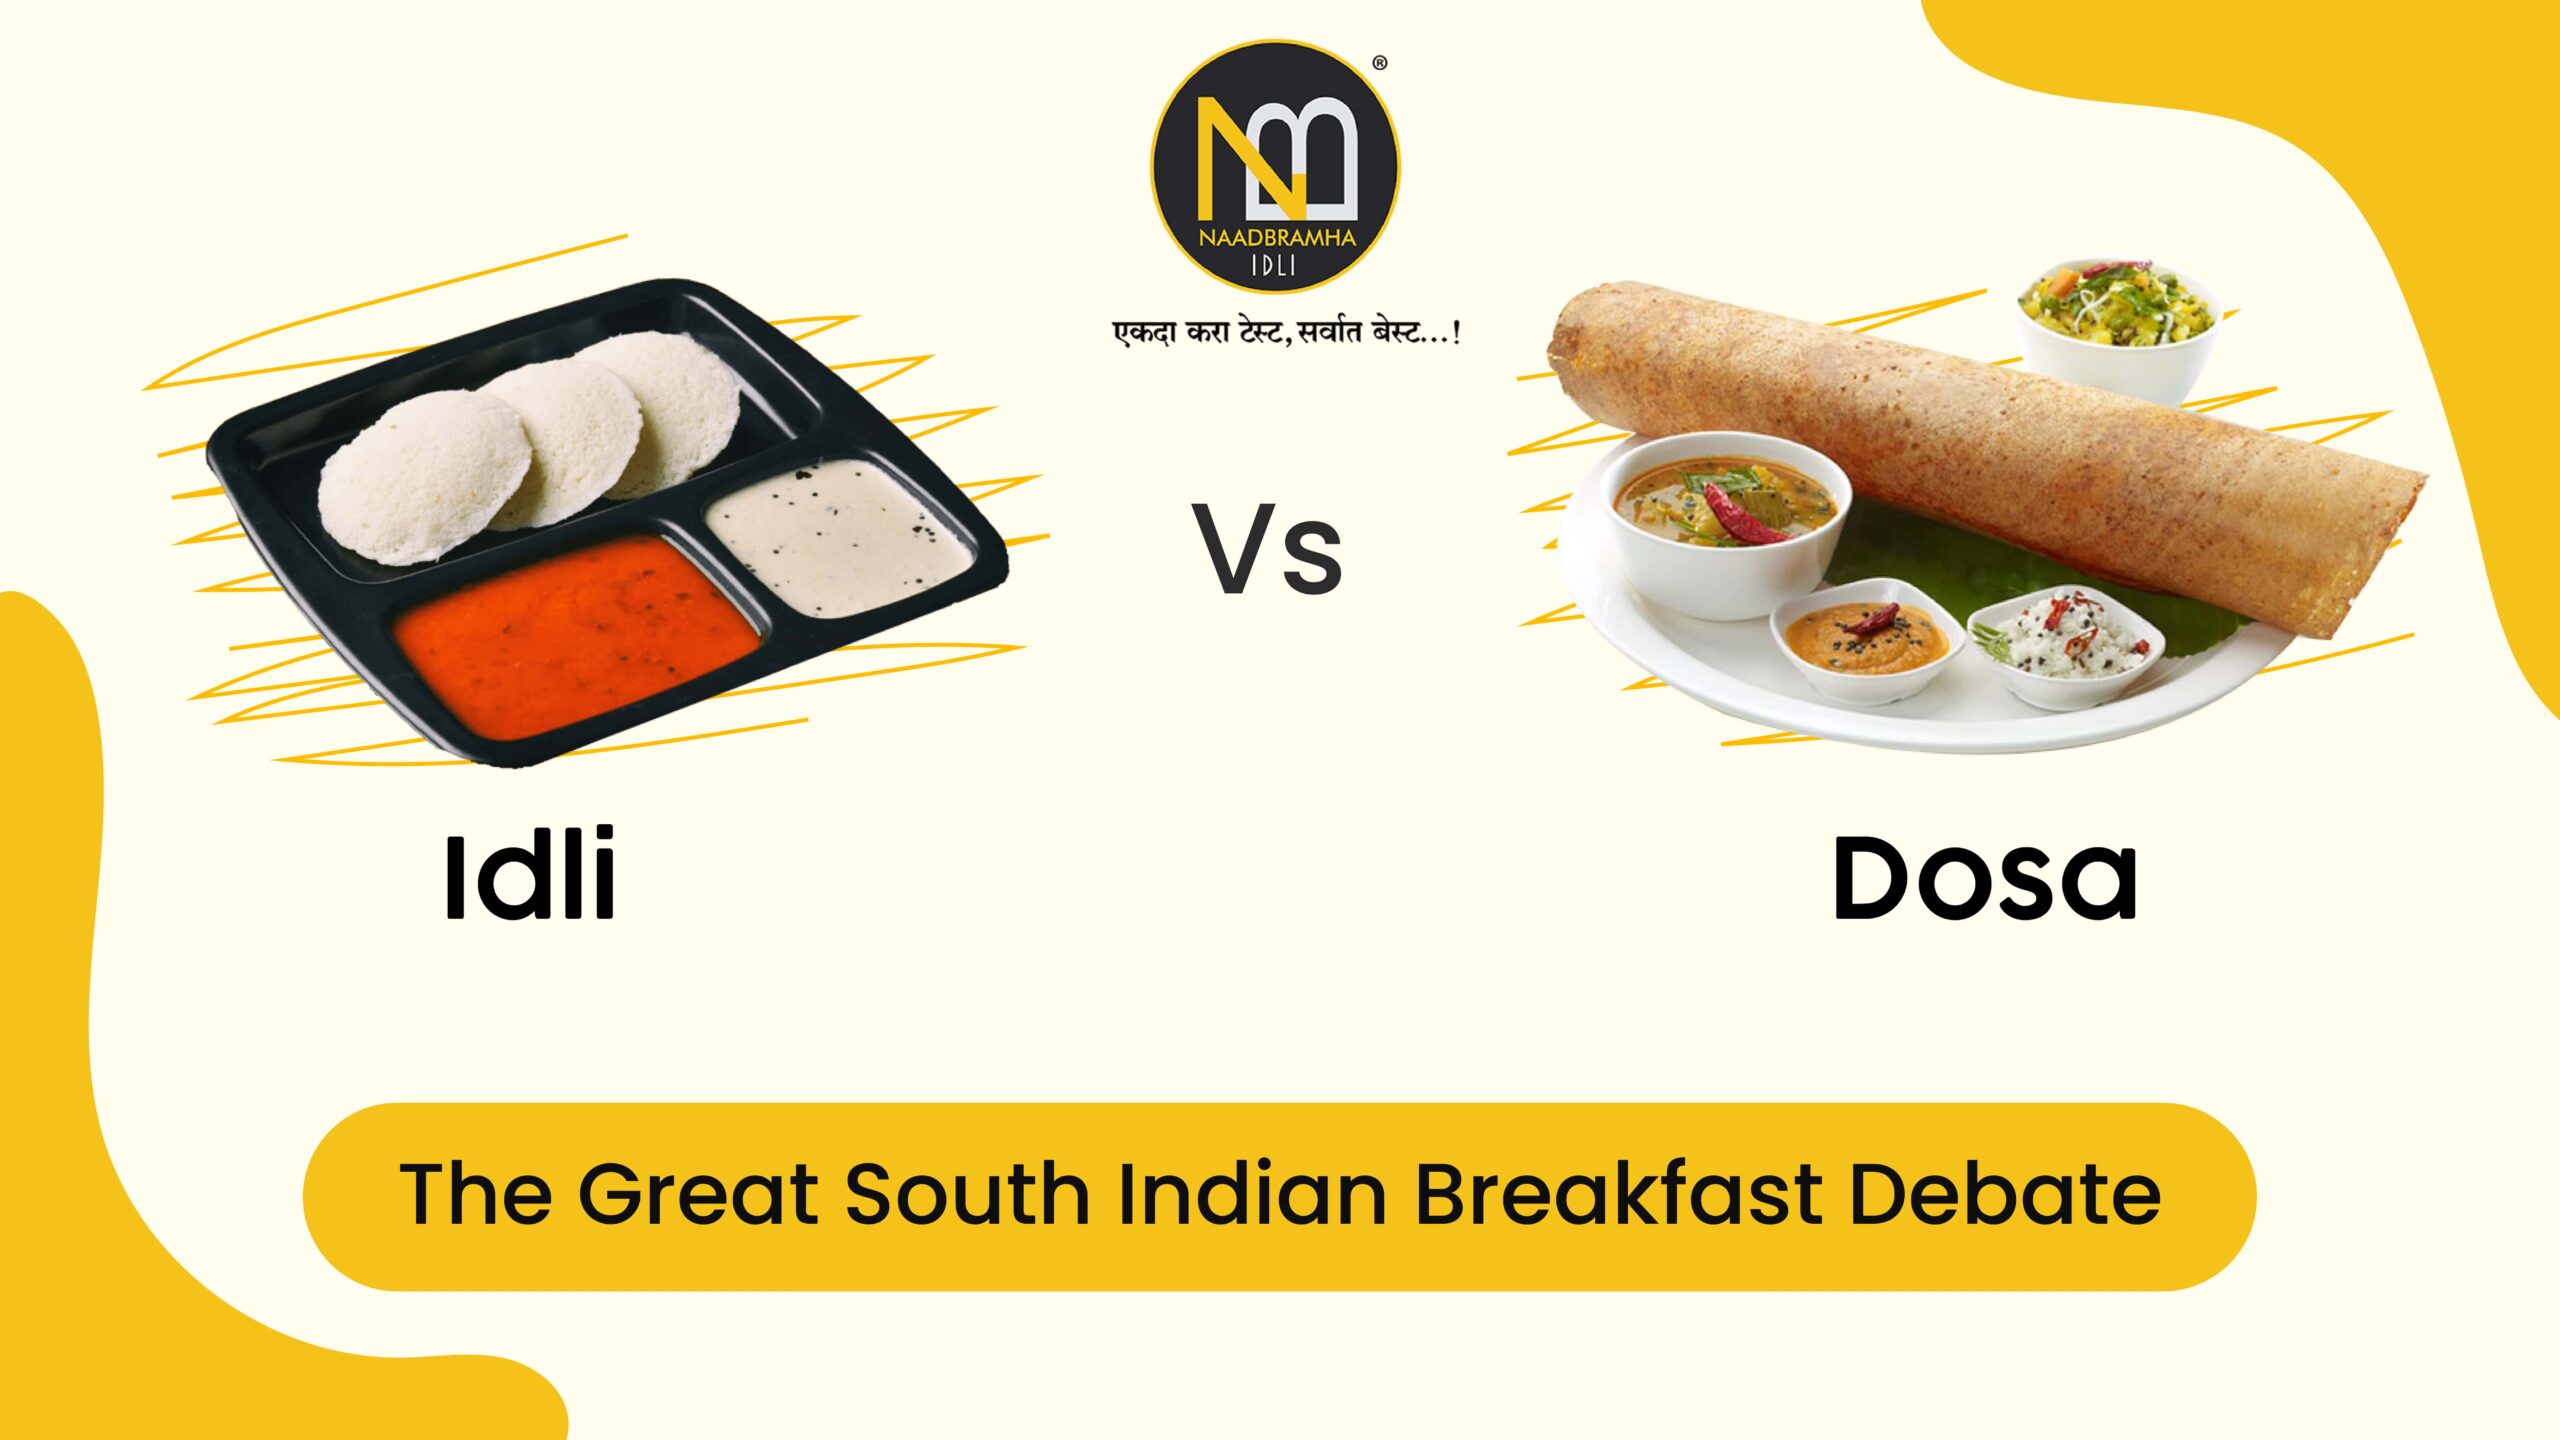 Idli vs. Dosa: The Great South Indian Breakfast Debate